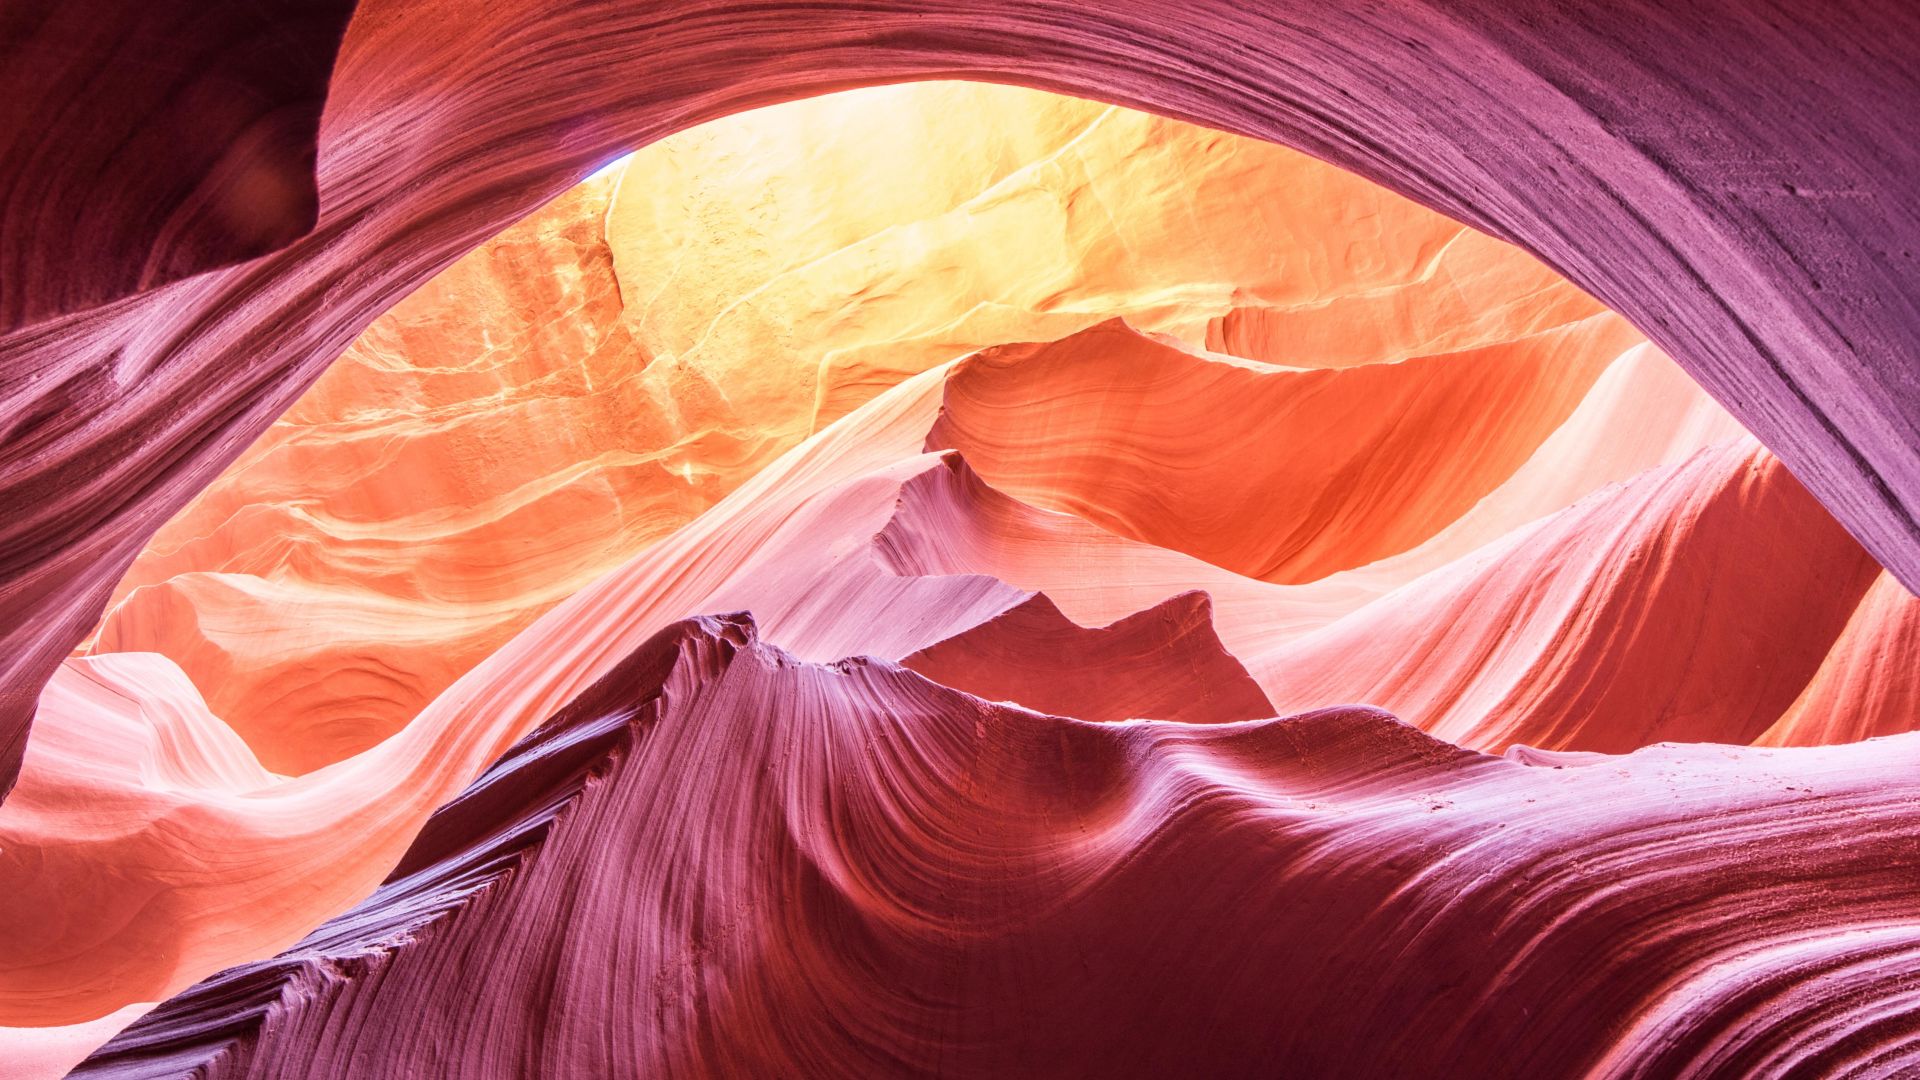 Desktop Wallpaper Antelope Canyon Cave Of Arizona, Hd Image, Picture